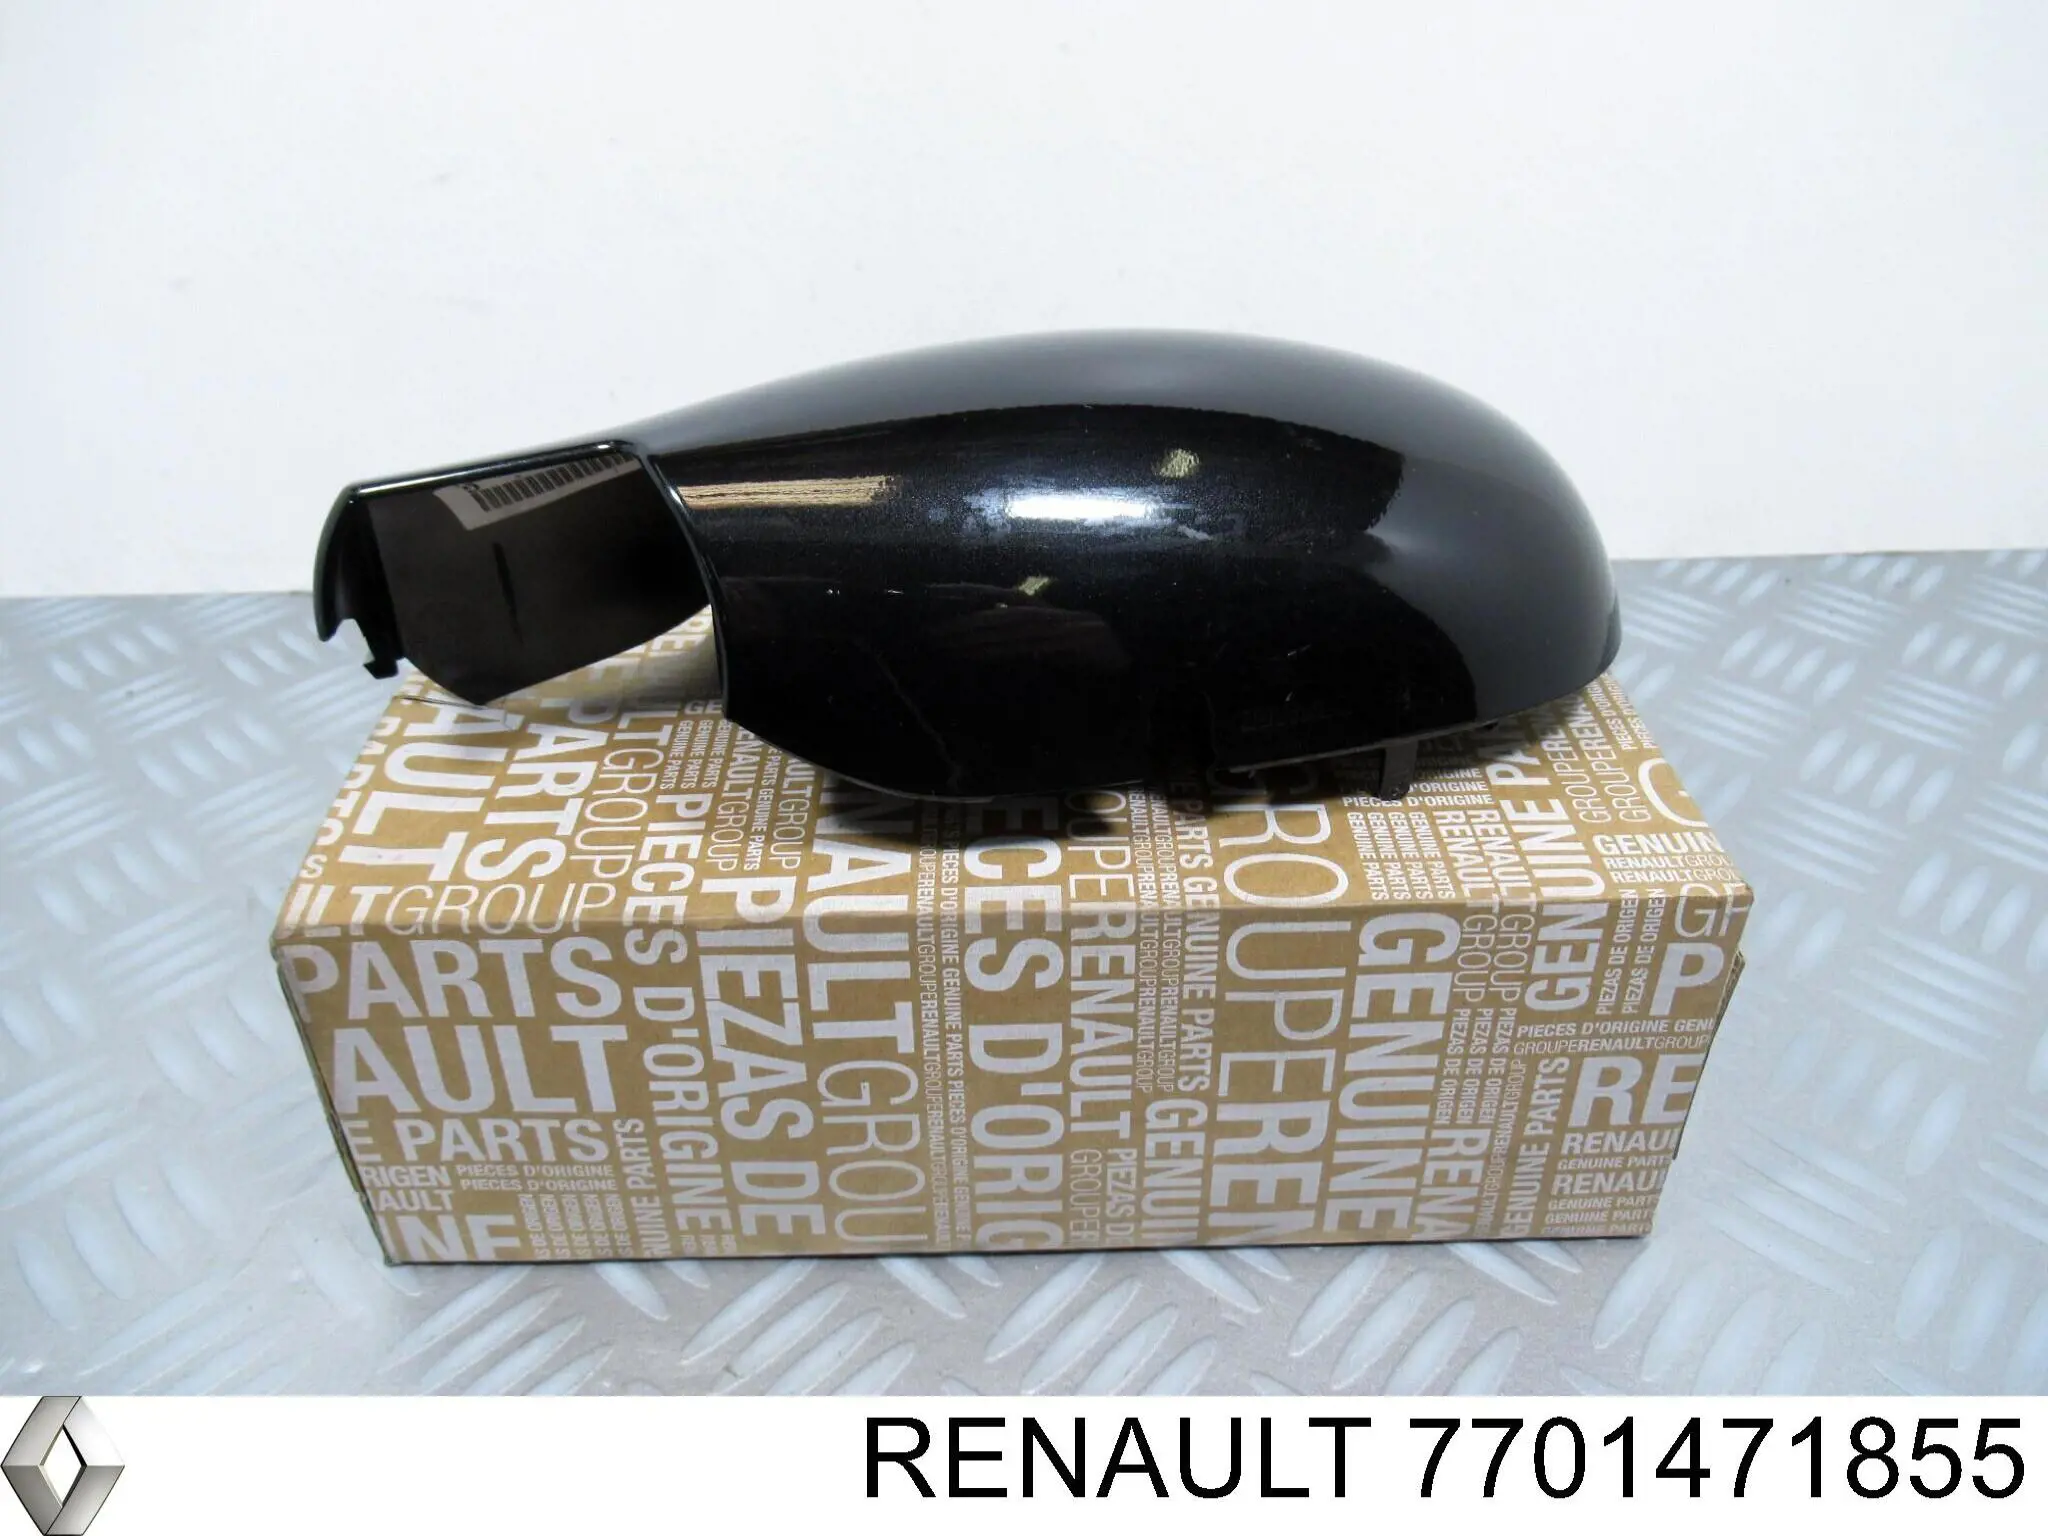 7701471855 Renault (RVI) cubierta de espejo retrovisor derecho